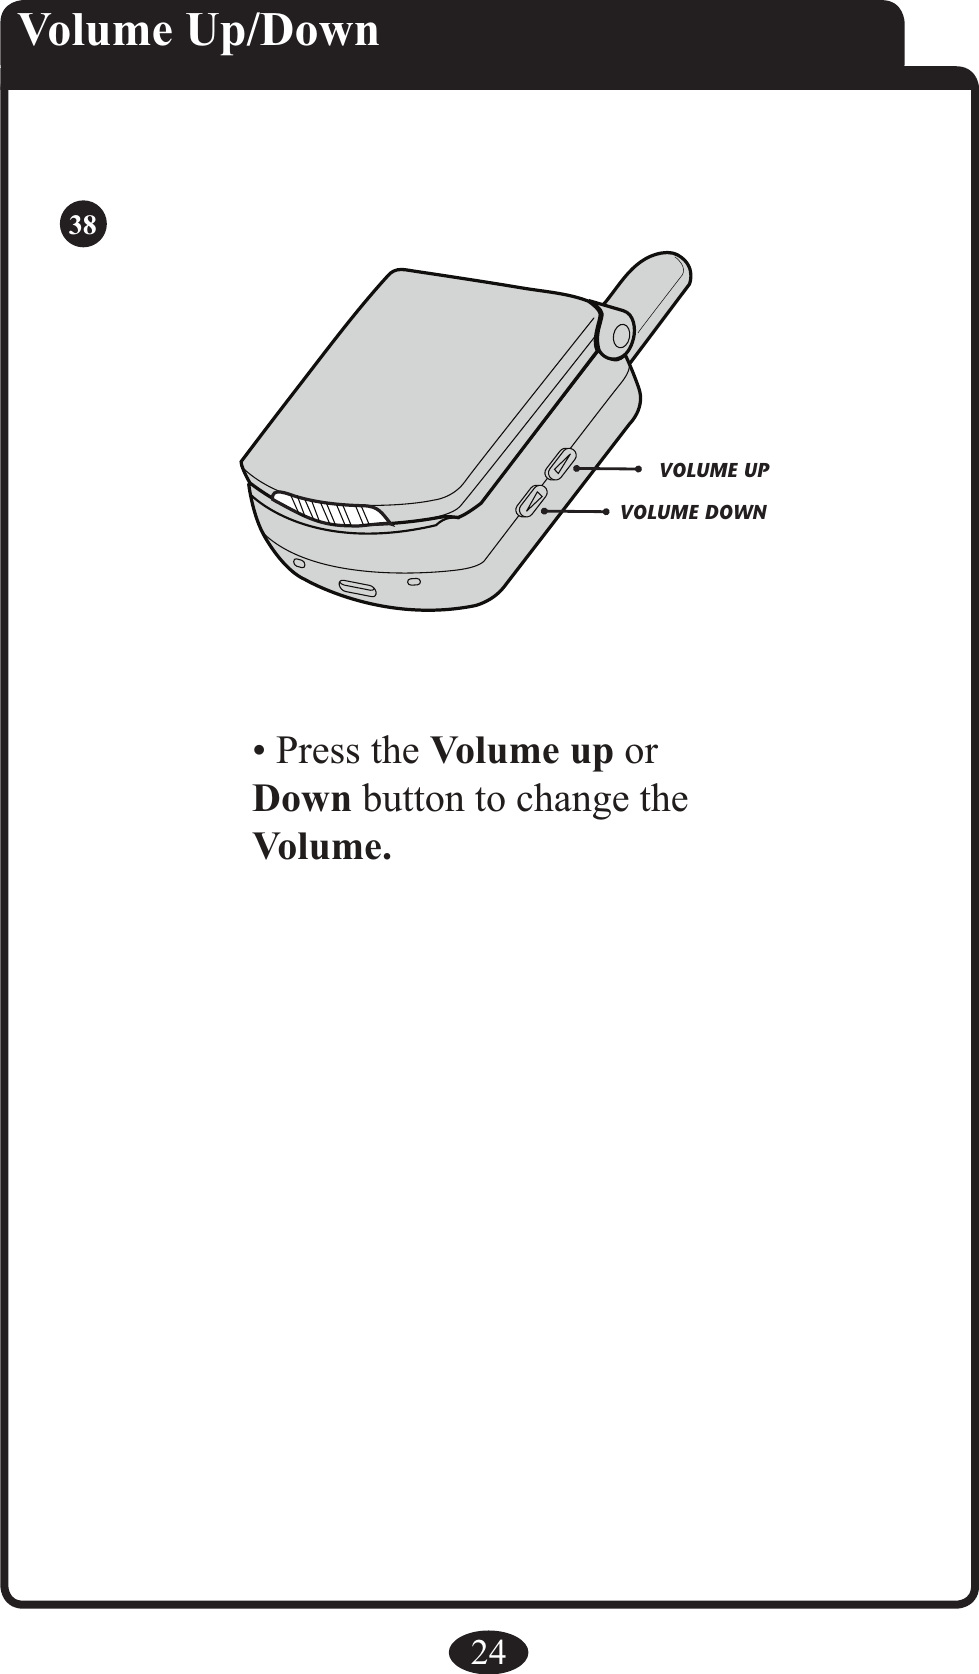 24Volume Up/DownVOLUME DOWN VOLUME UP38• Press the Volume up or Down button to change the Volume.